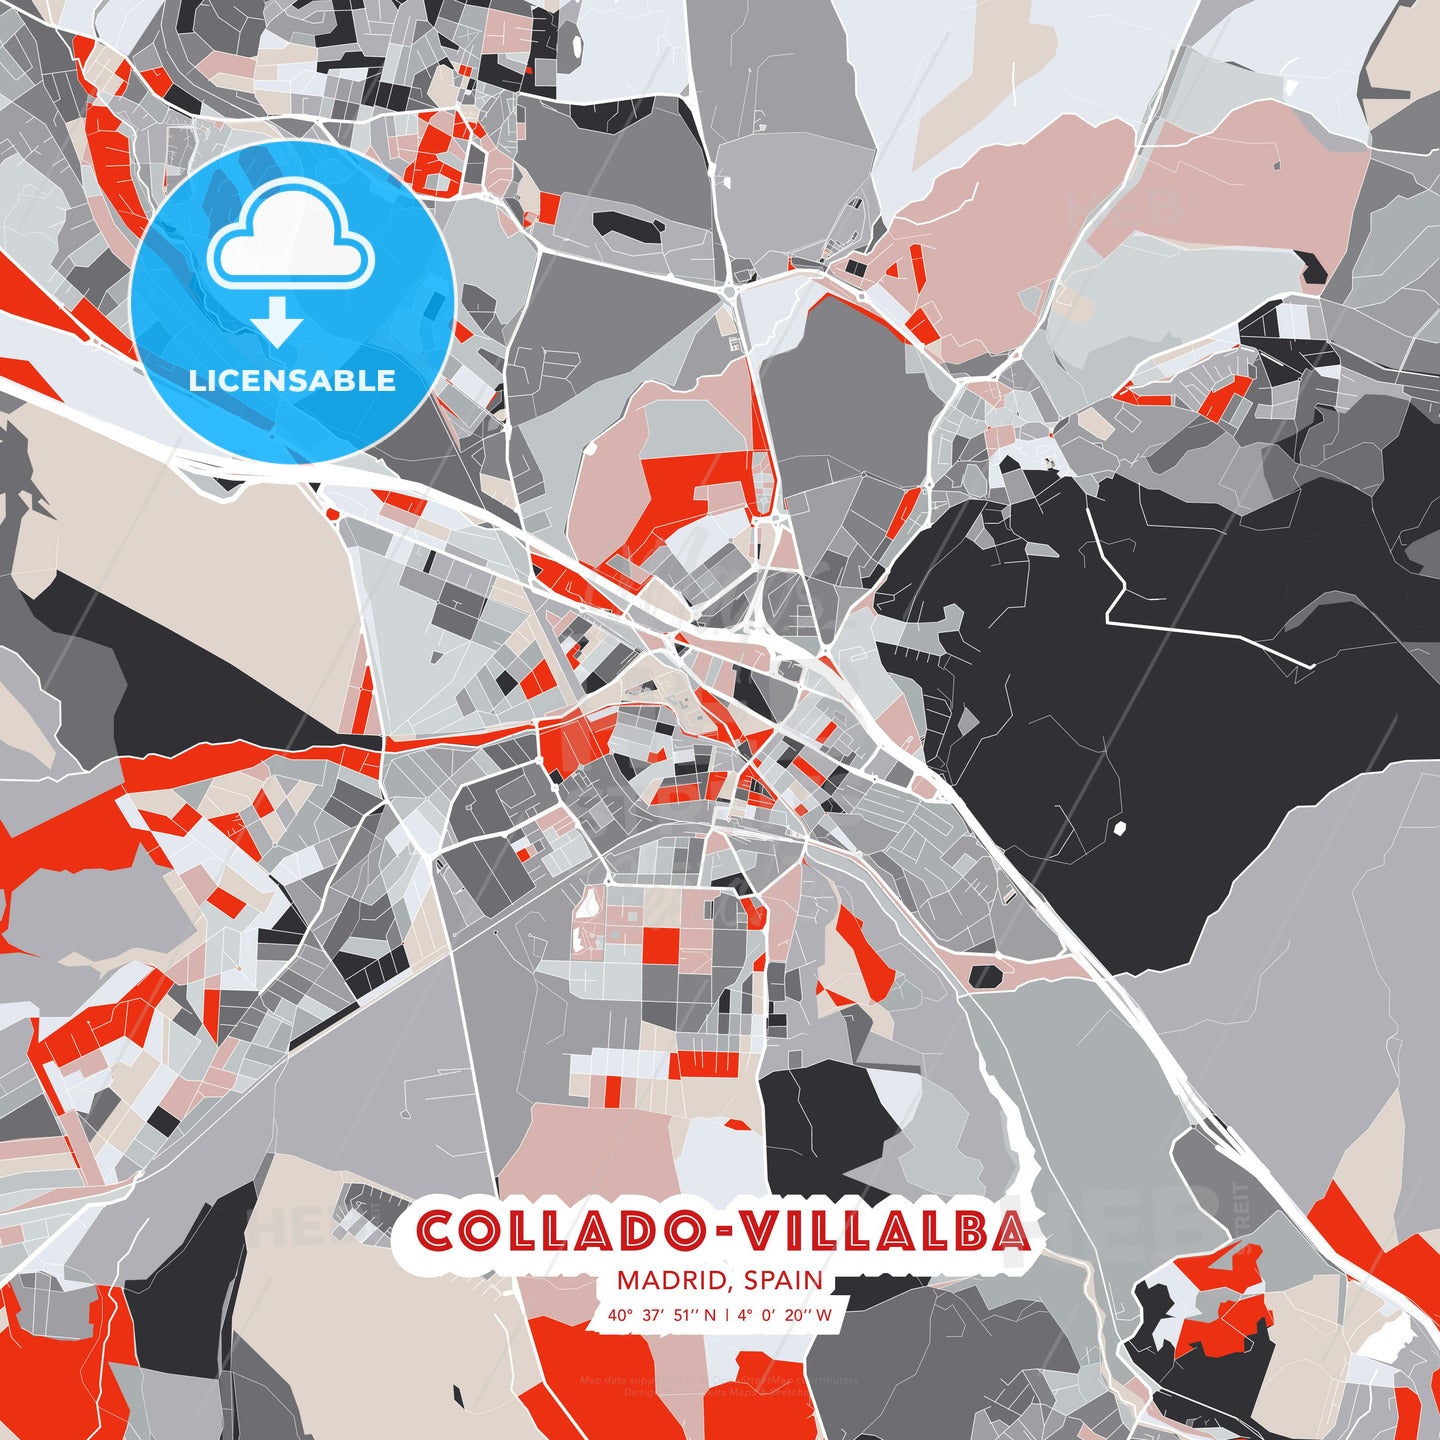 Collado-Villalba, Madrid, Spain, modern map - HEBSTREITS Sketches